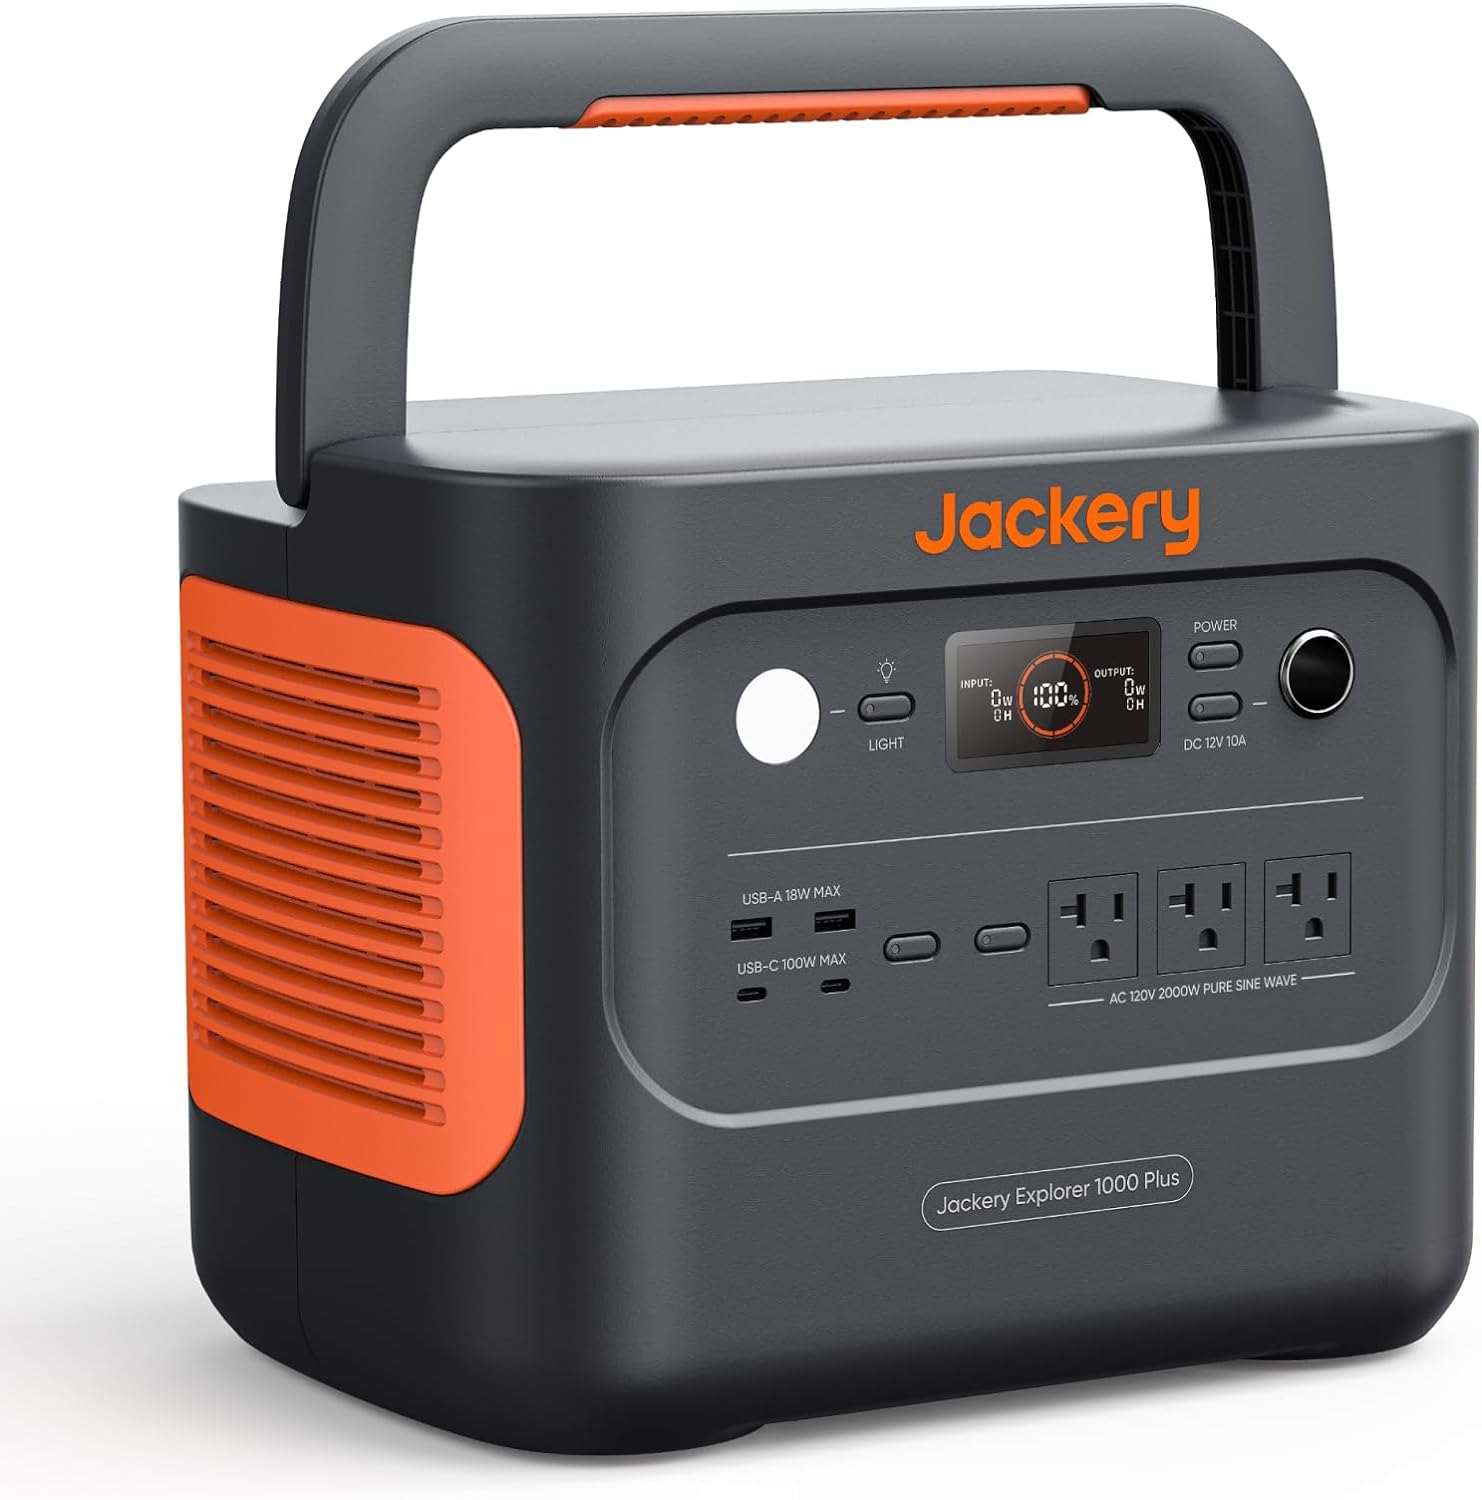 Jackery Open Box Jackery Explorer 1000 Plus Portable Power Station JE-1000C - BLACK / ORANGE